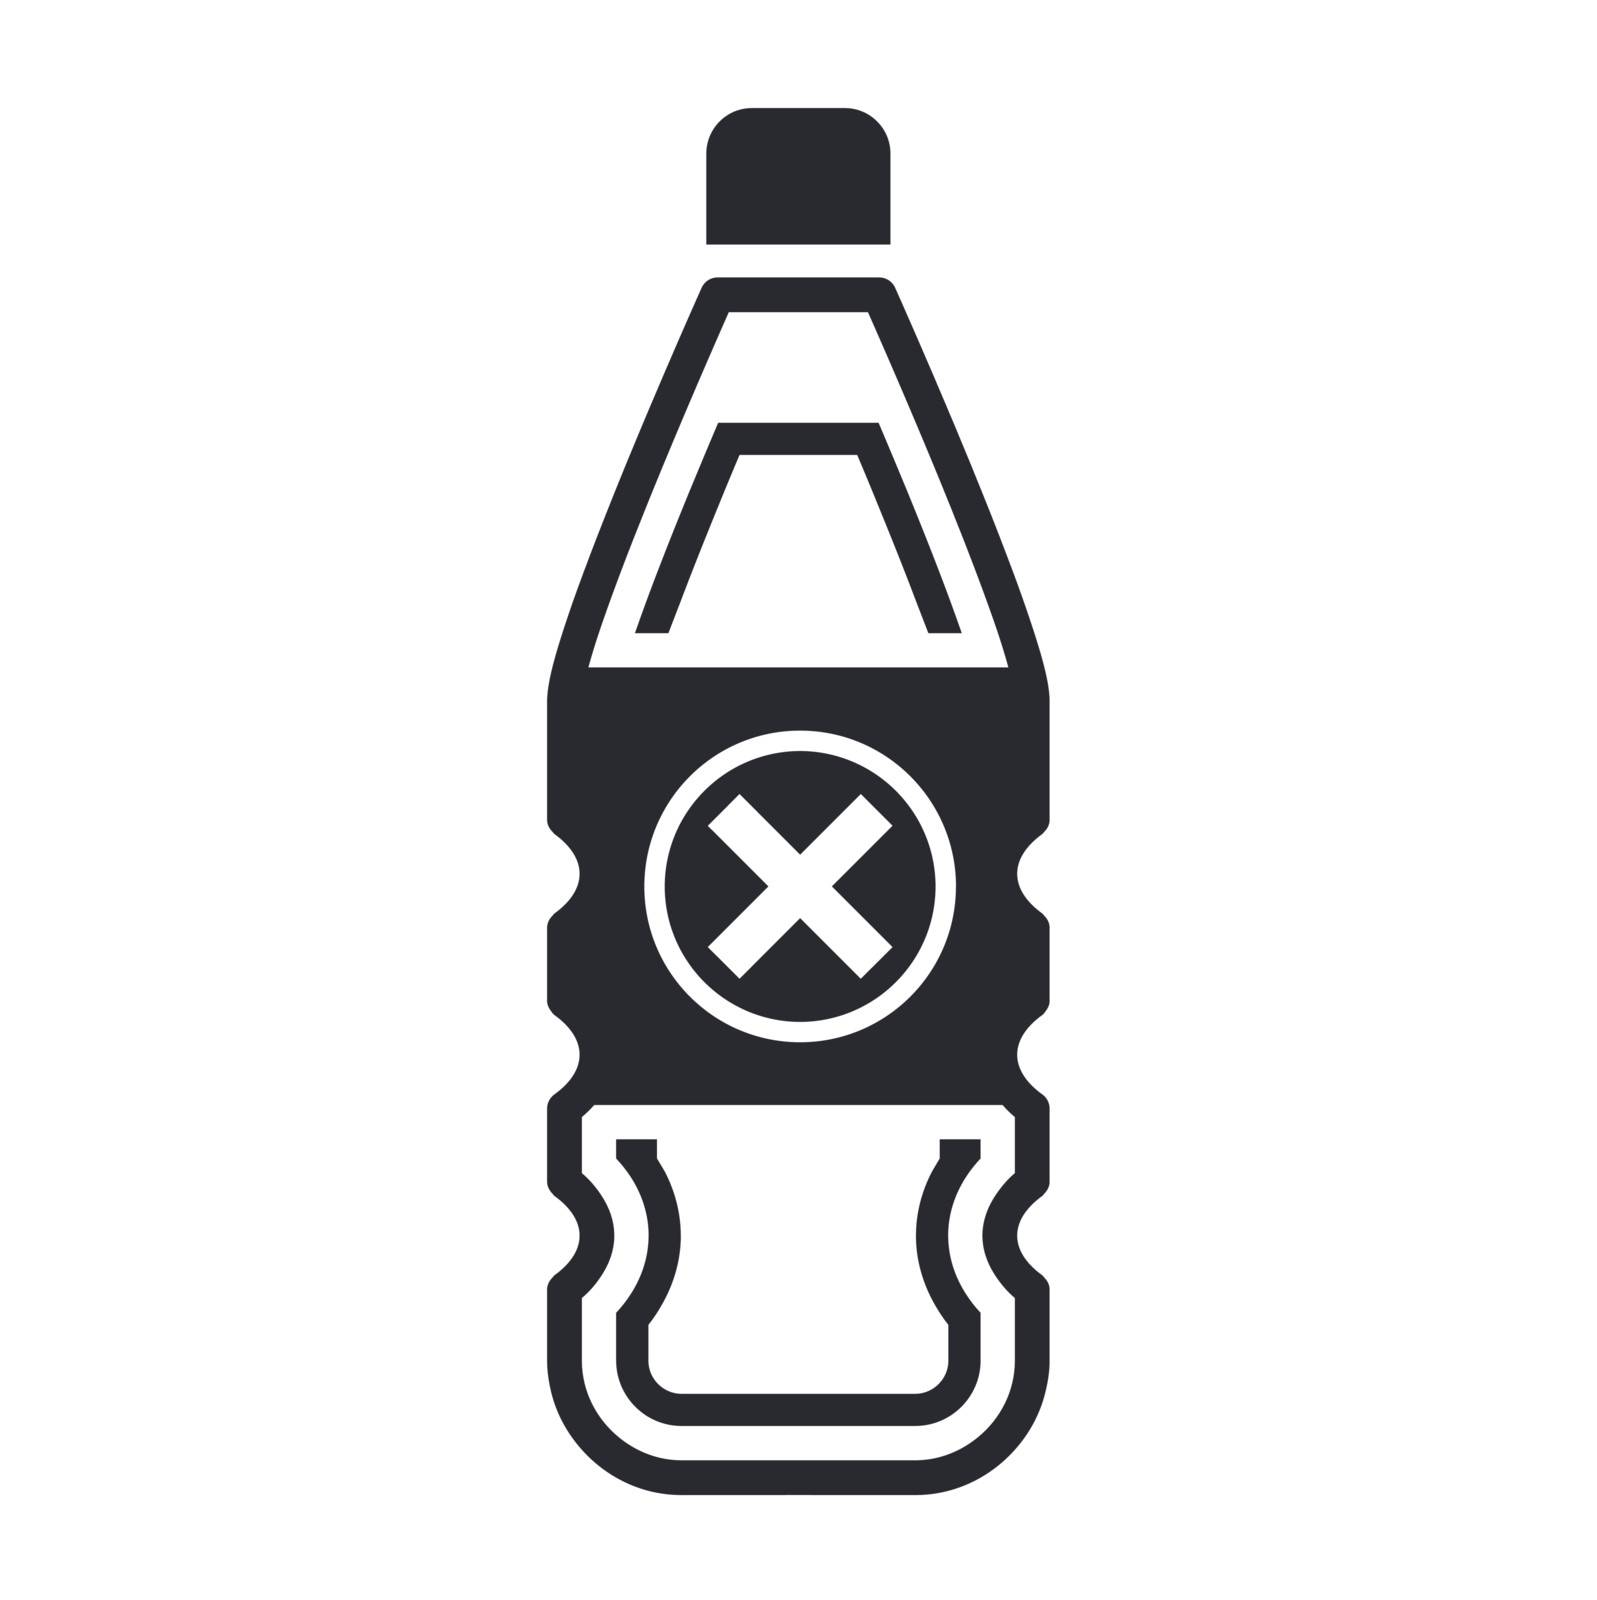 Vector illustration of single isolated dangerous bottle icon